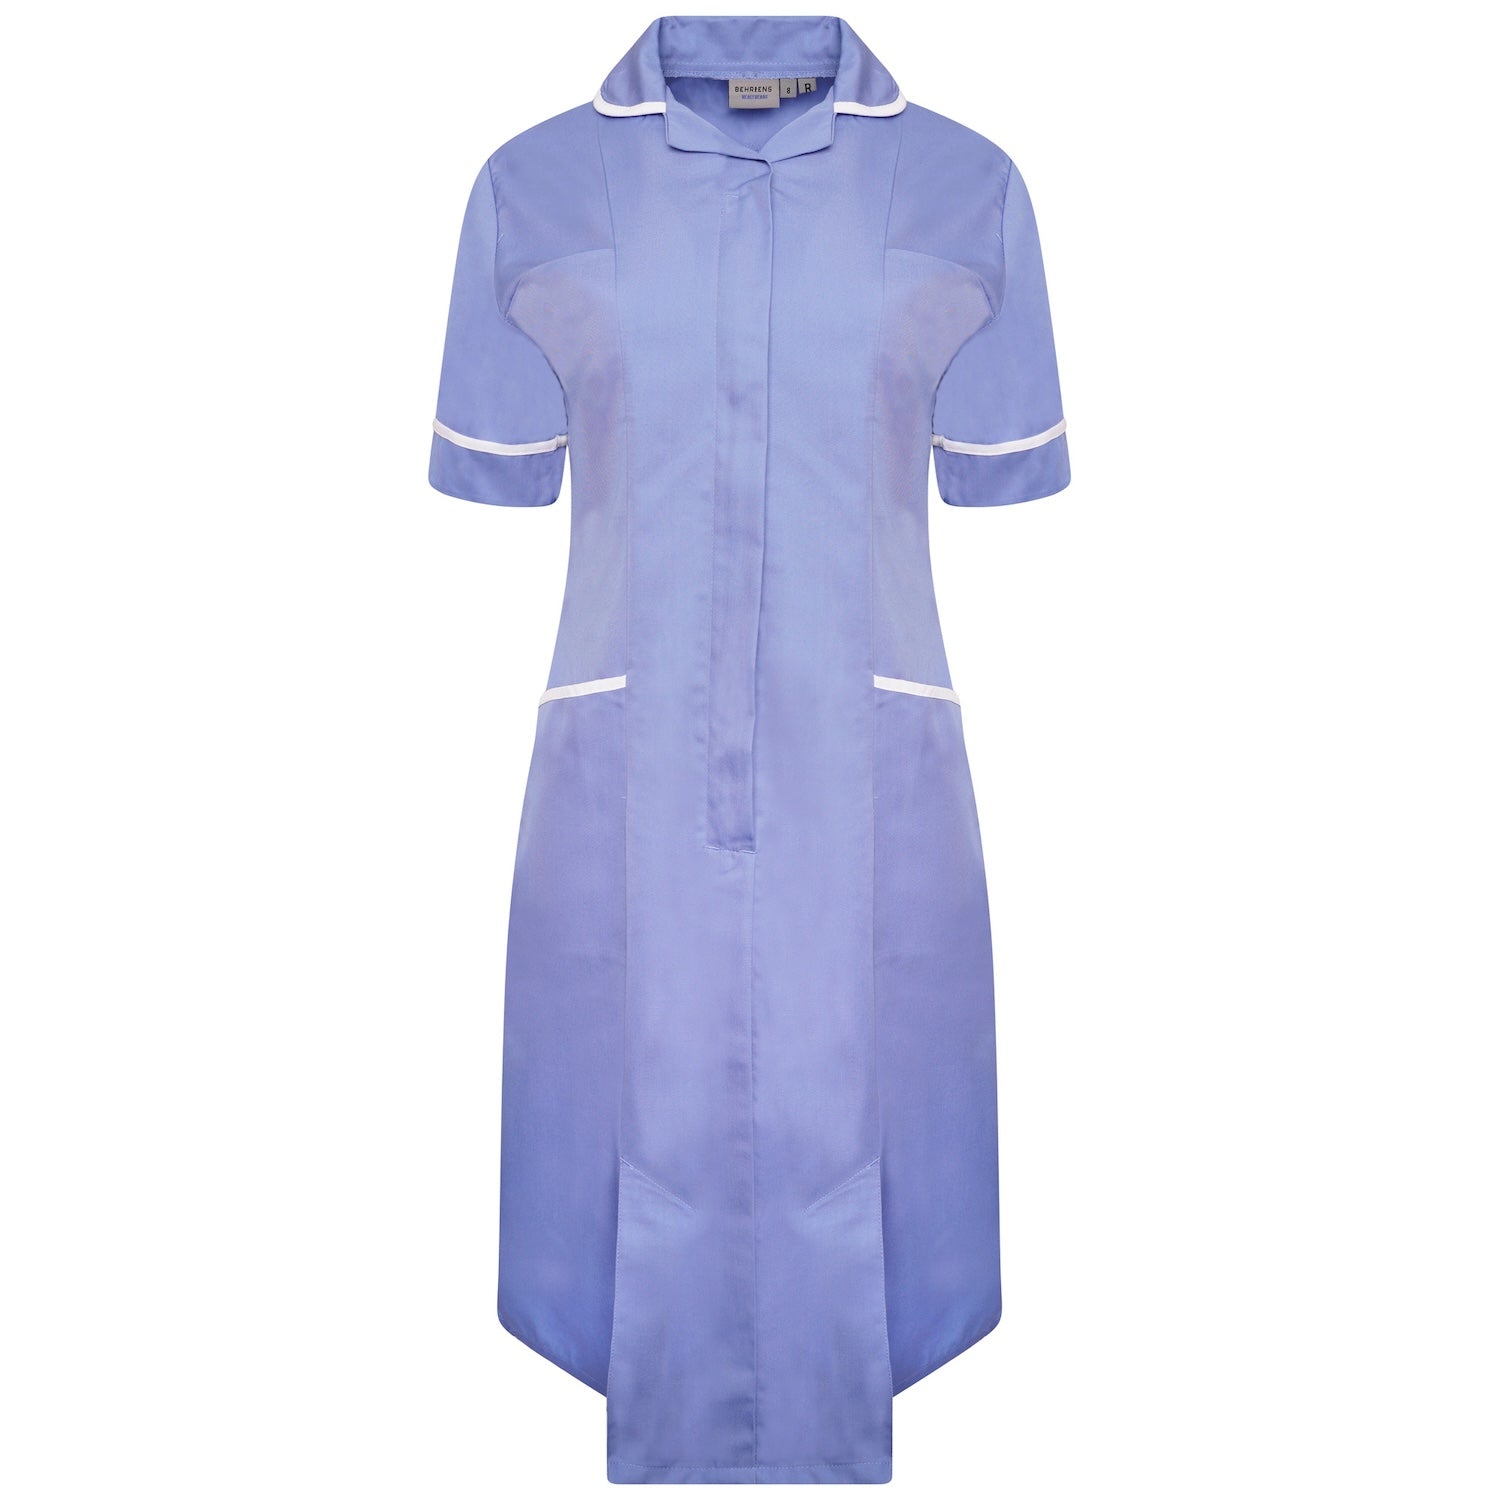 Ladies Healthcare Dress | Round Collar | Metro Blue/White Trim